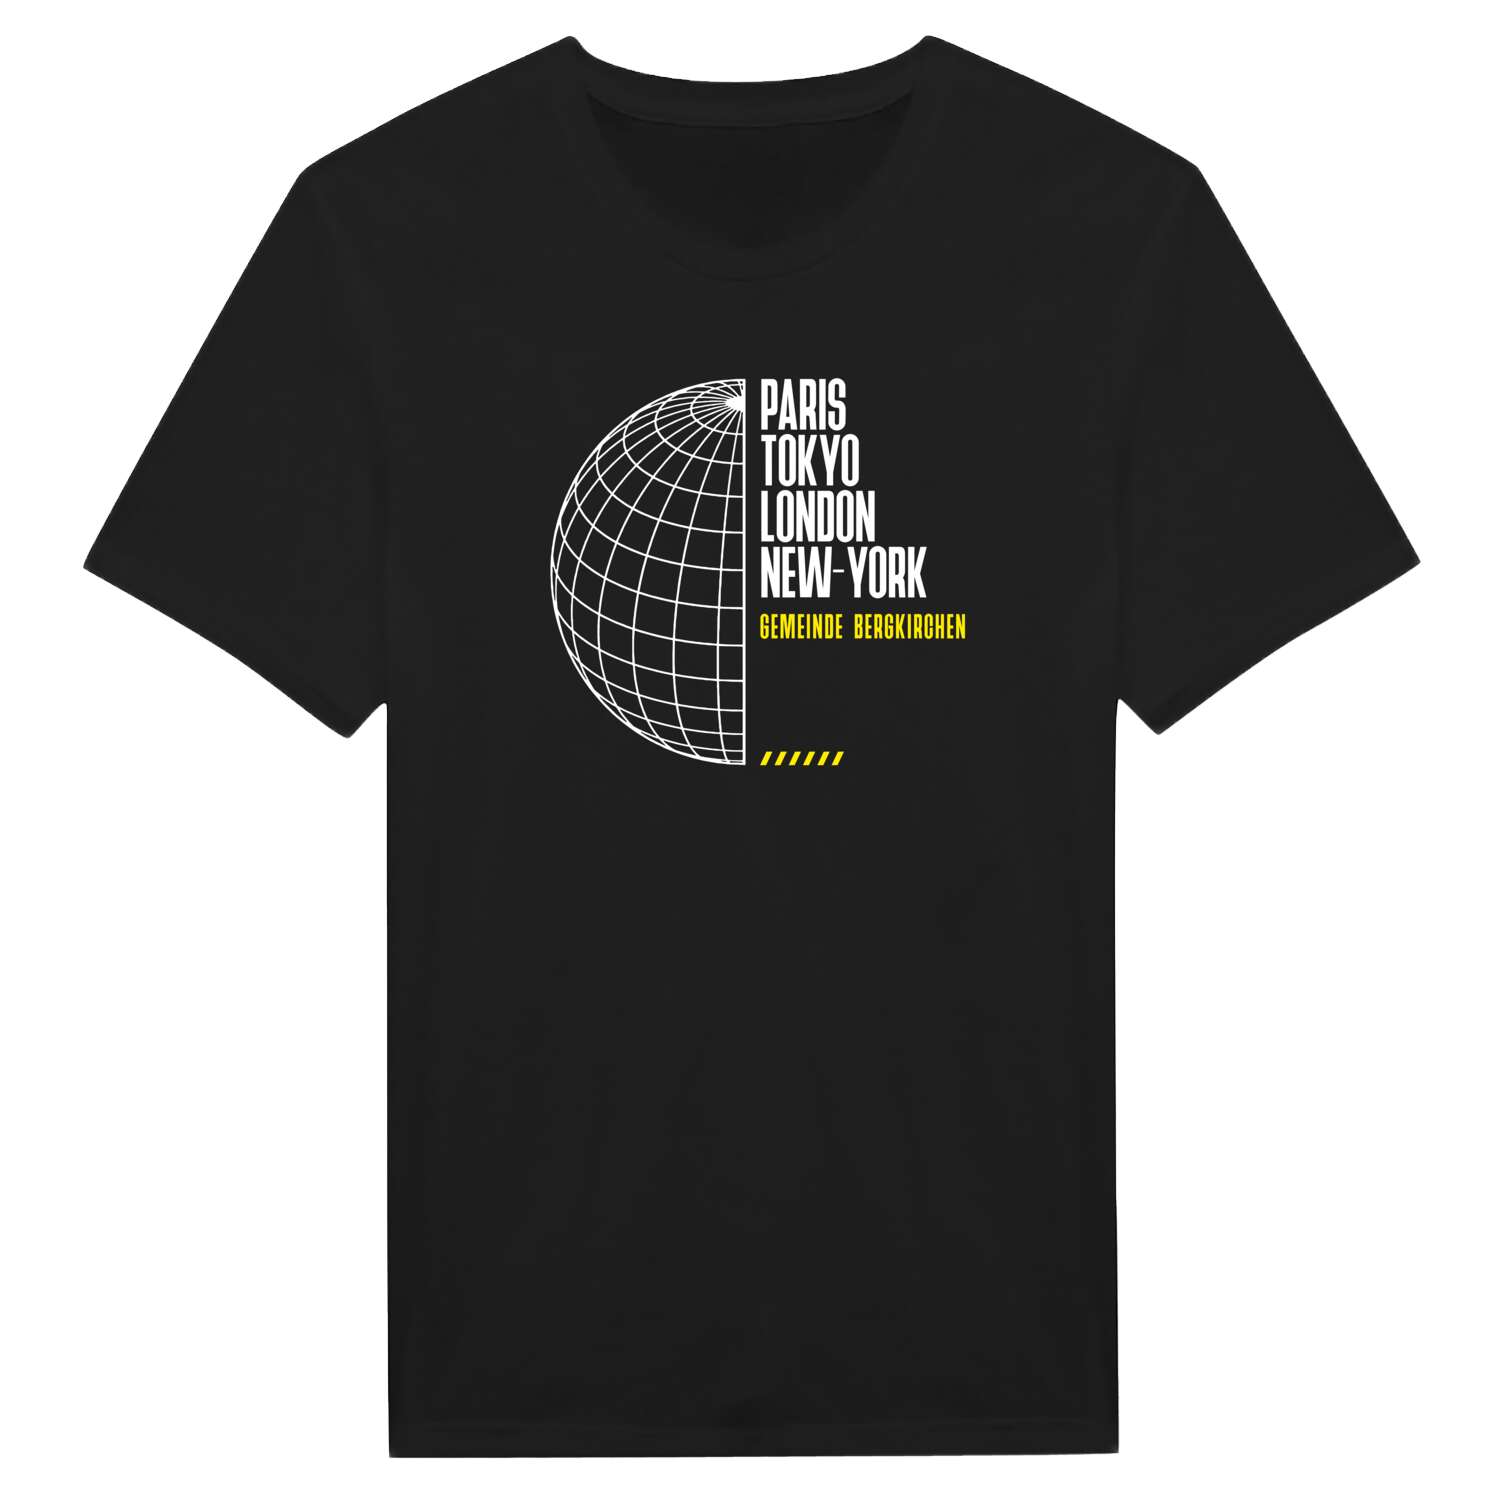 Gemeinde Bergkirchen T-Shirt »Paris Tokyo London«